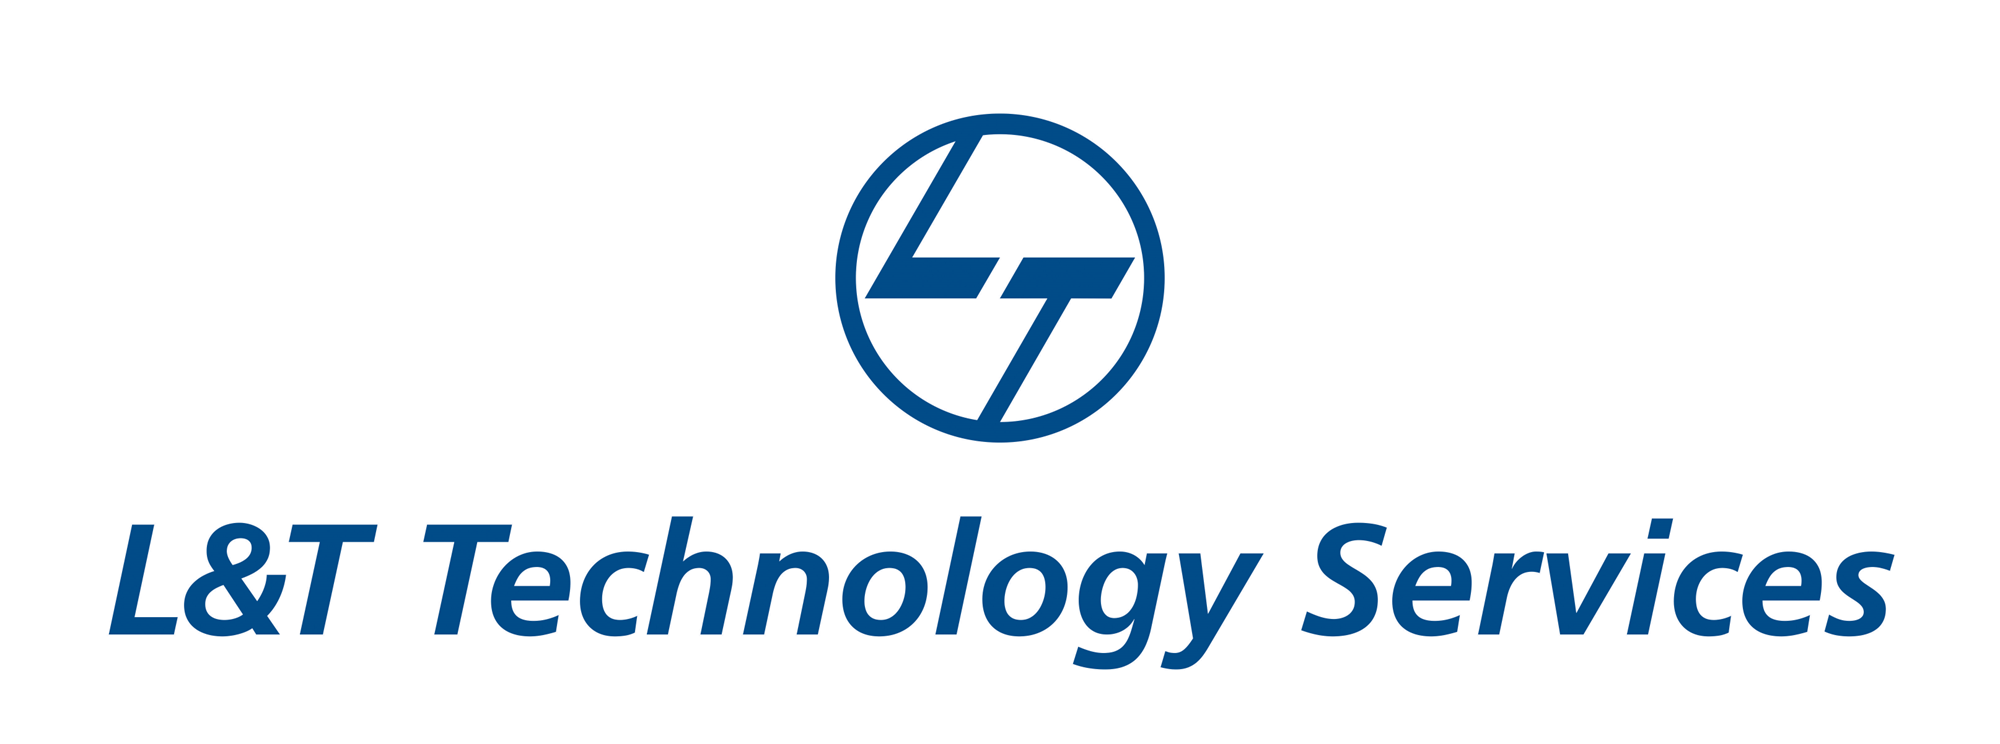 L&T Technology Services Ltda